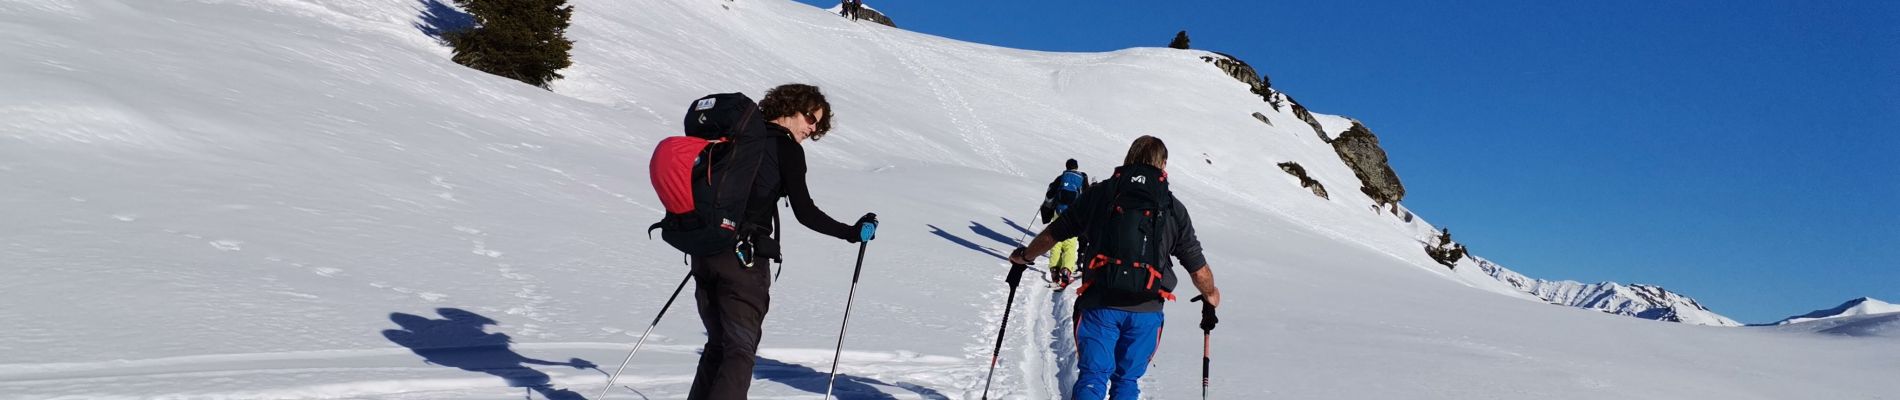 Trail Touring skiing Jarrier - Pierre Brune / le Chatelard - Photo